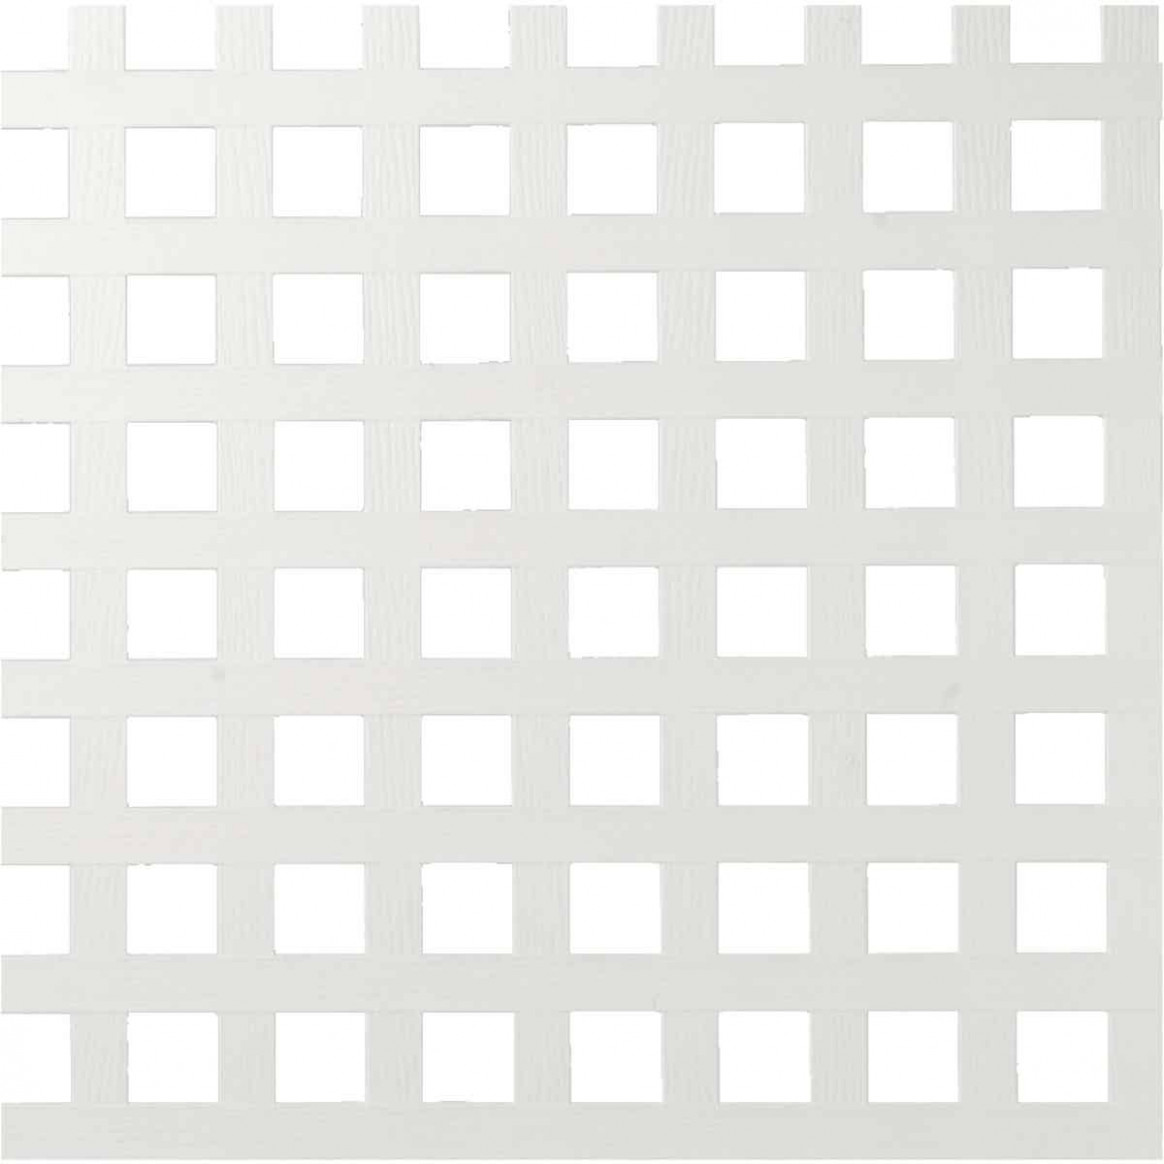 First Drive square lattice panels 4 x8